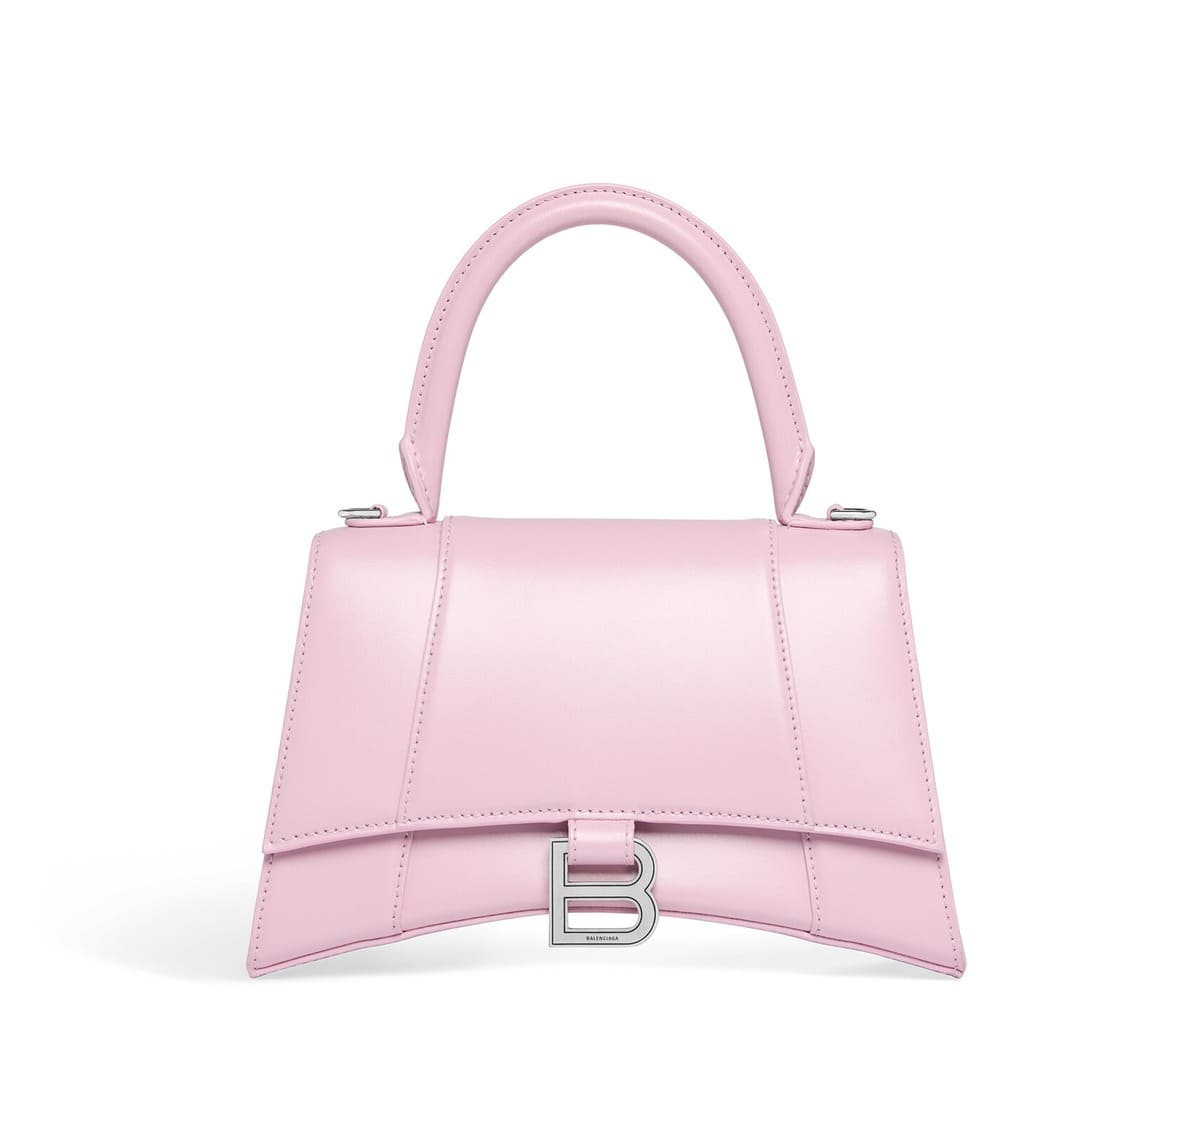 Balenciaga Hourglass Small Bag in Box Calfkin pink